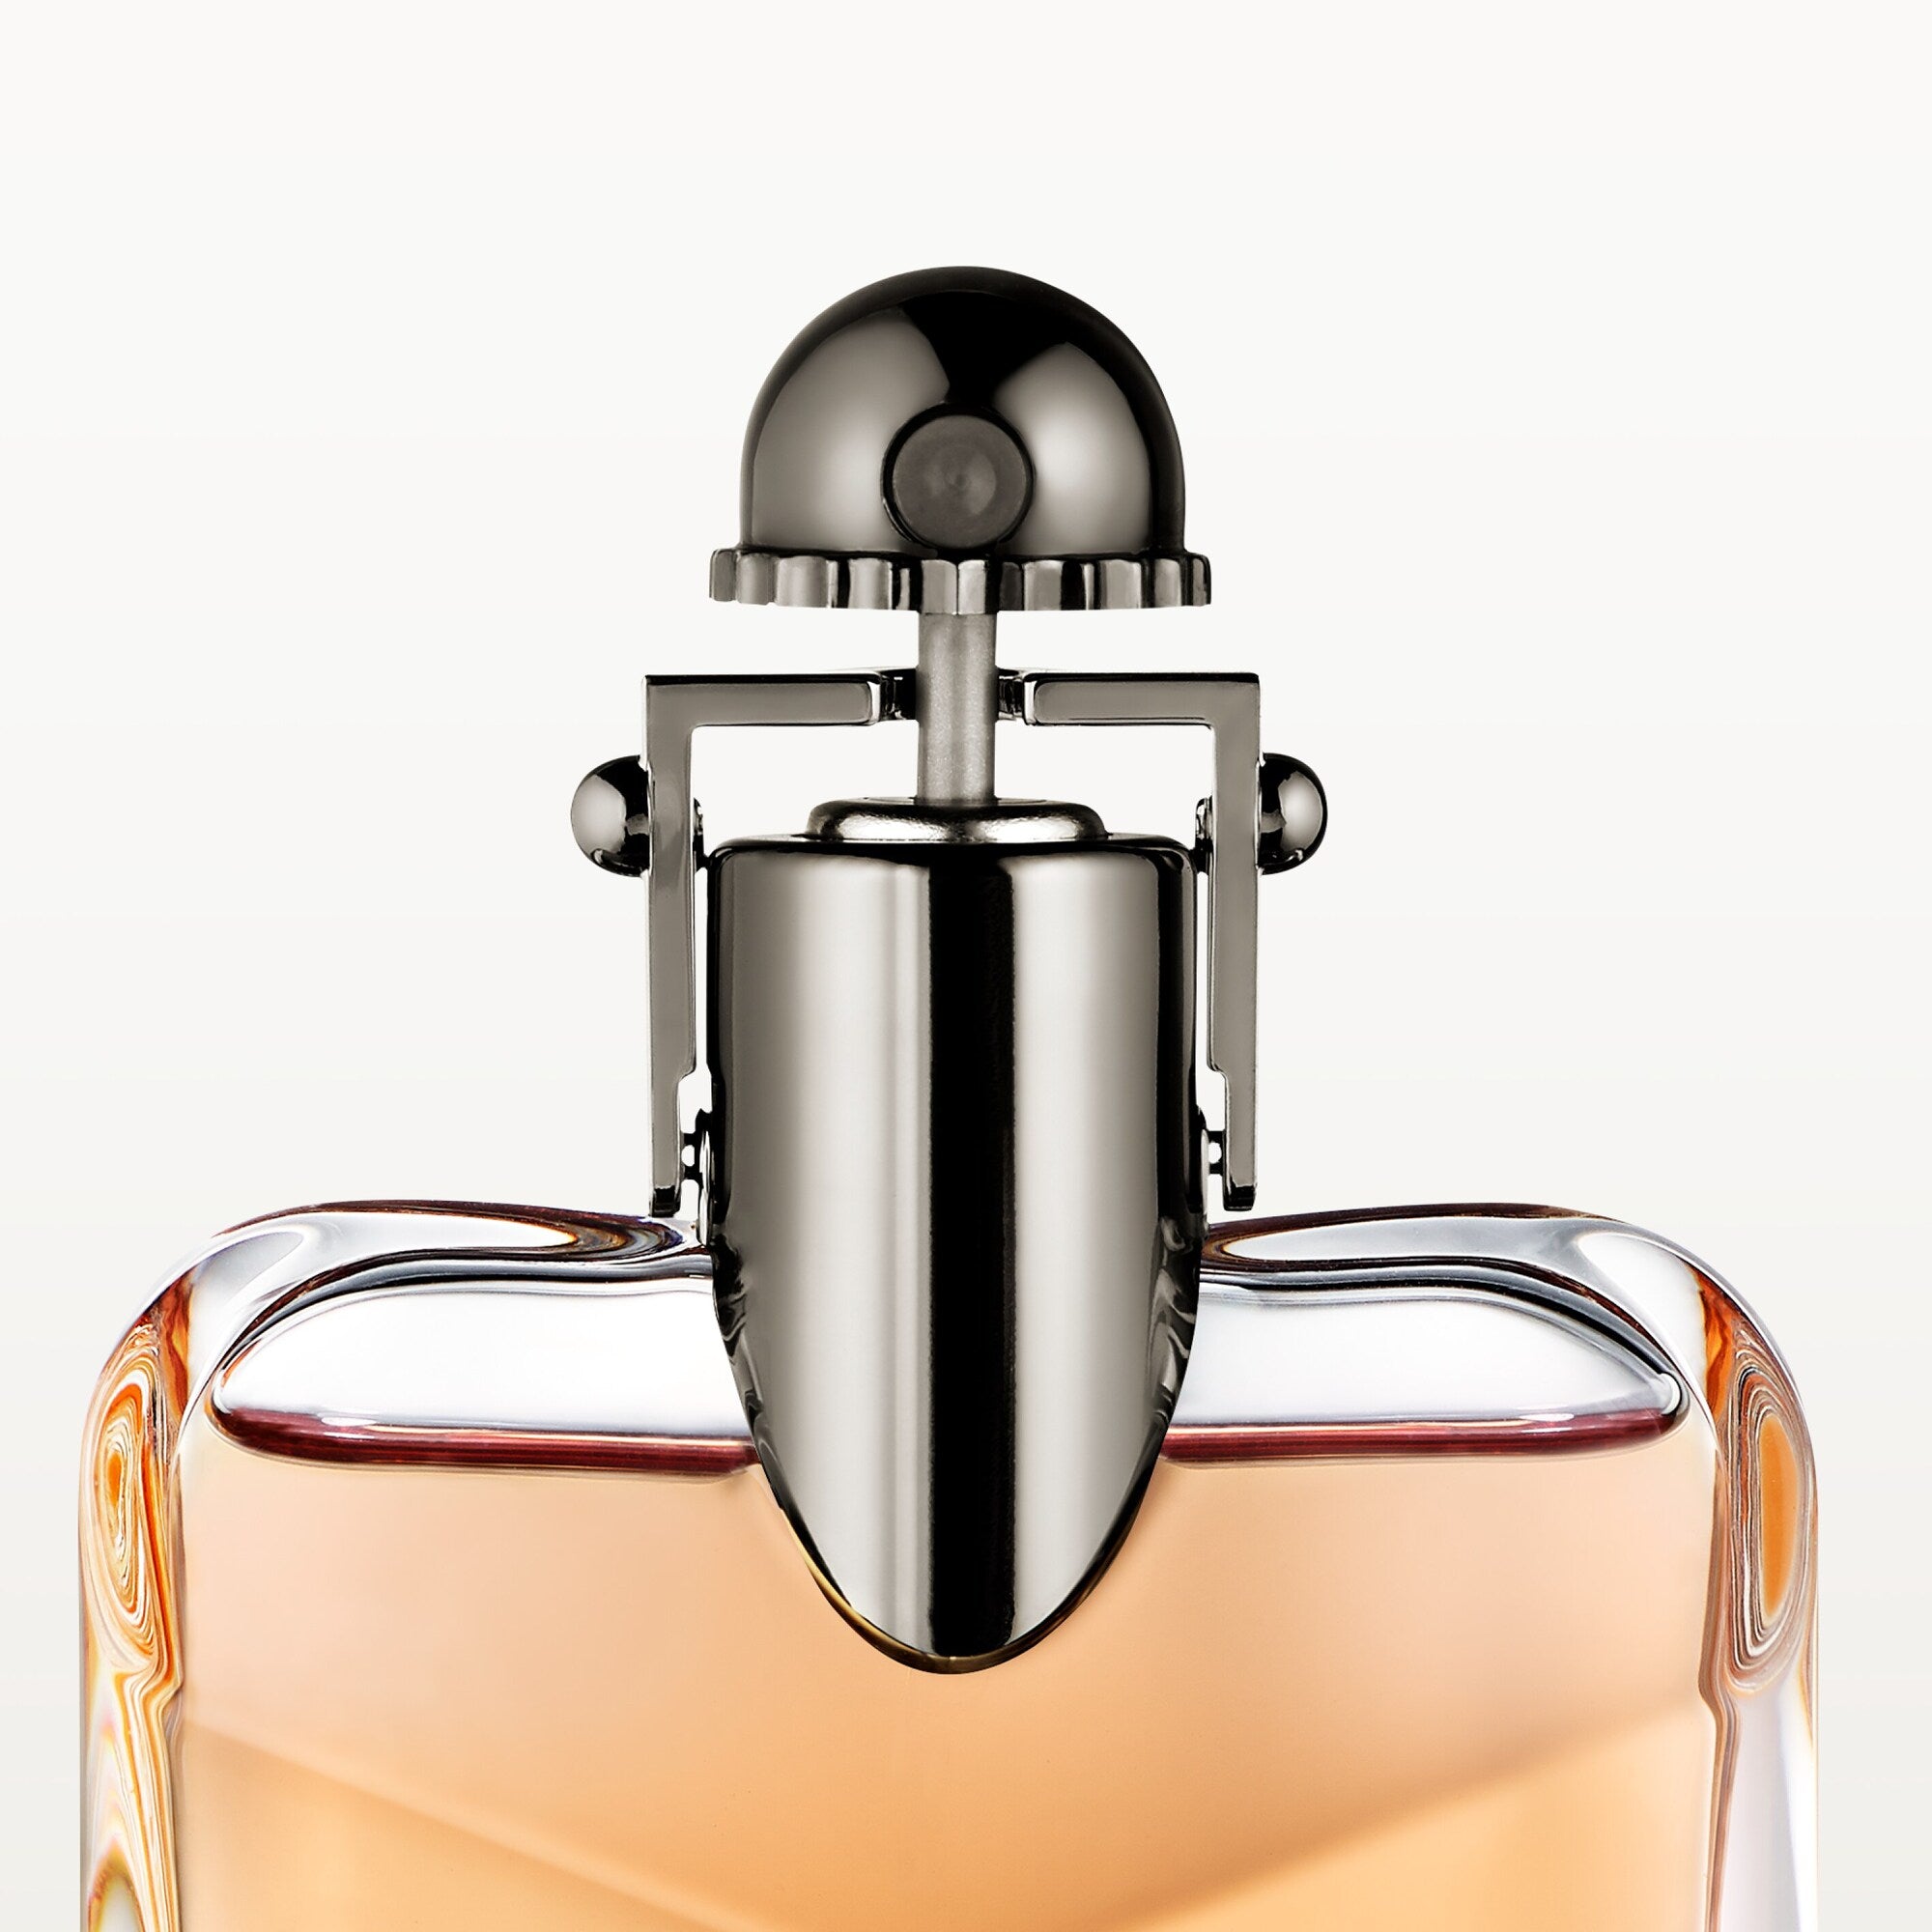 Nước Hoa CARTIER Déclaration Parfum #50 mL